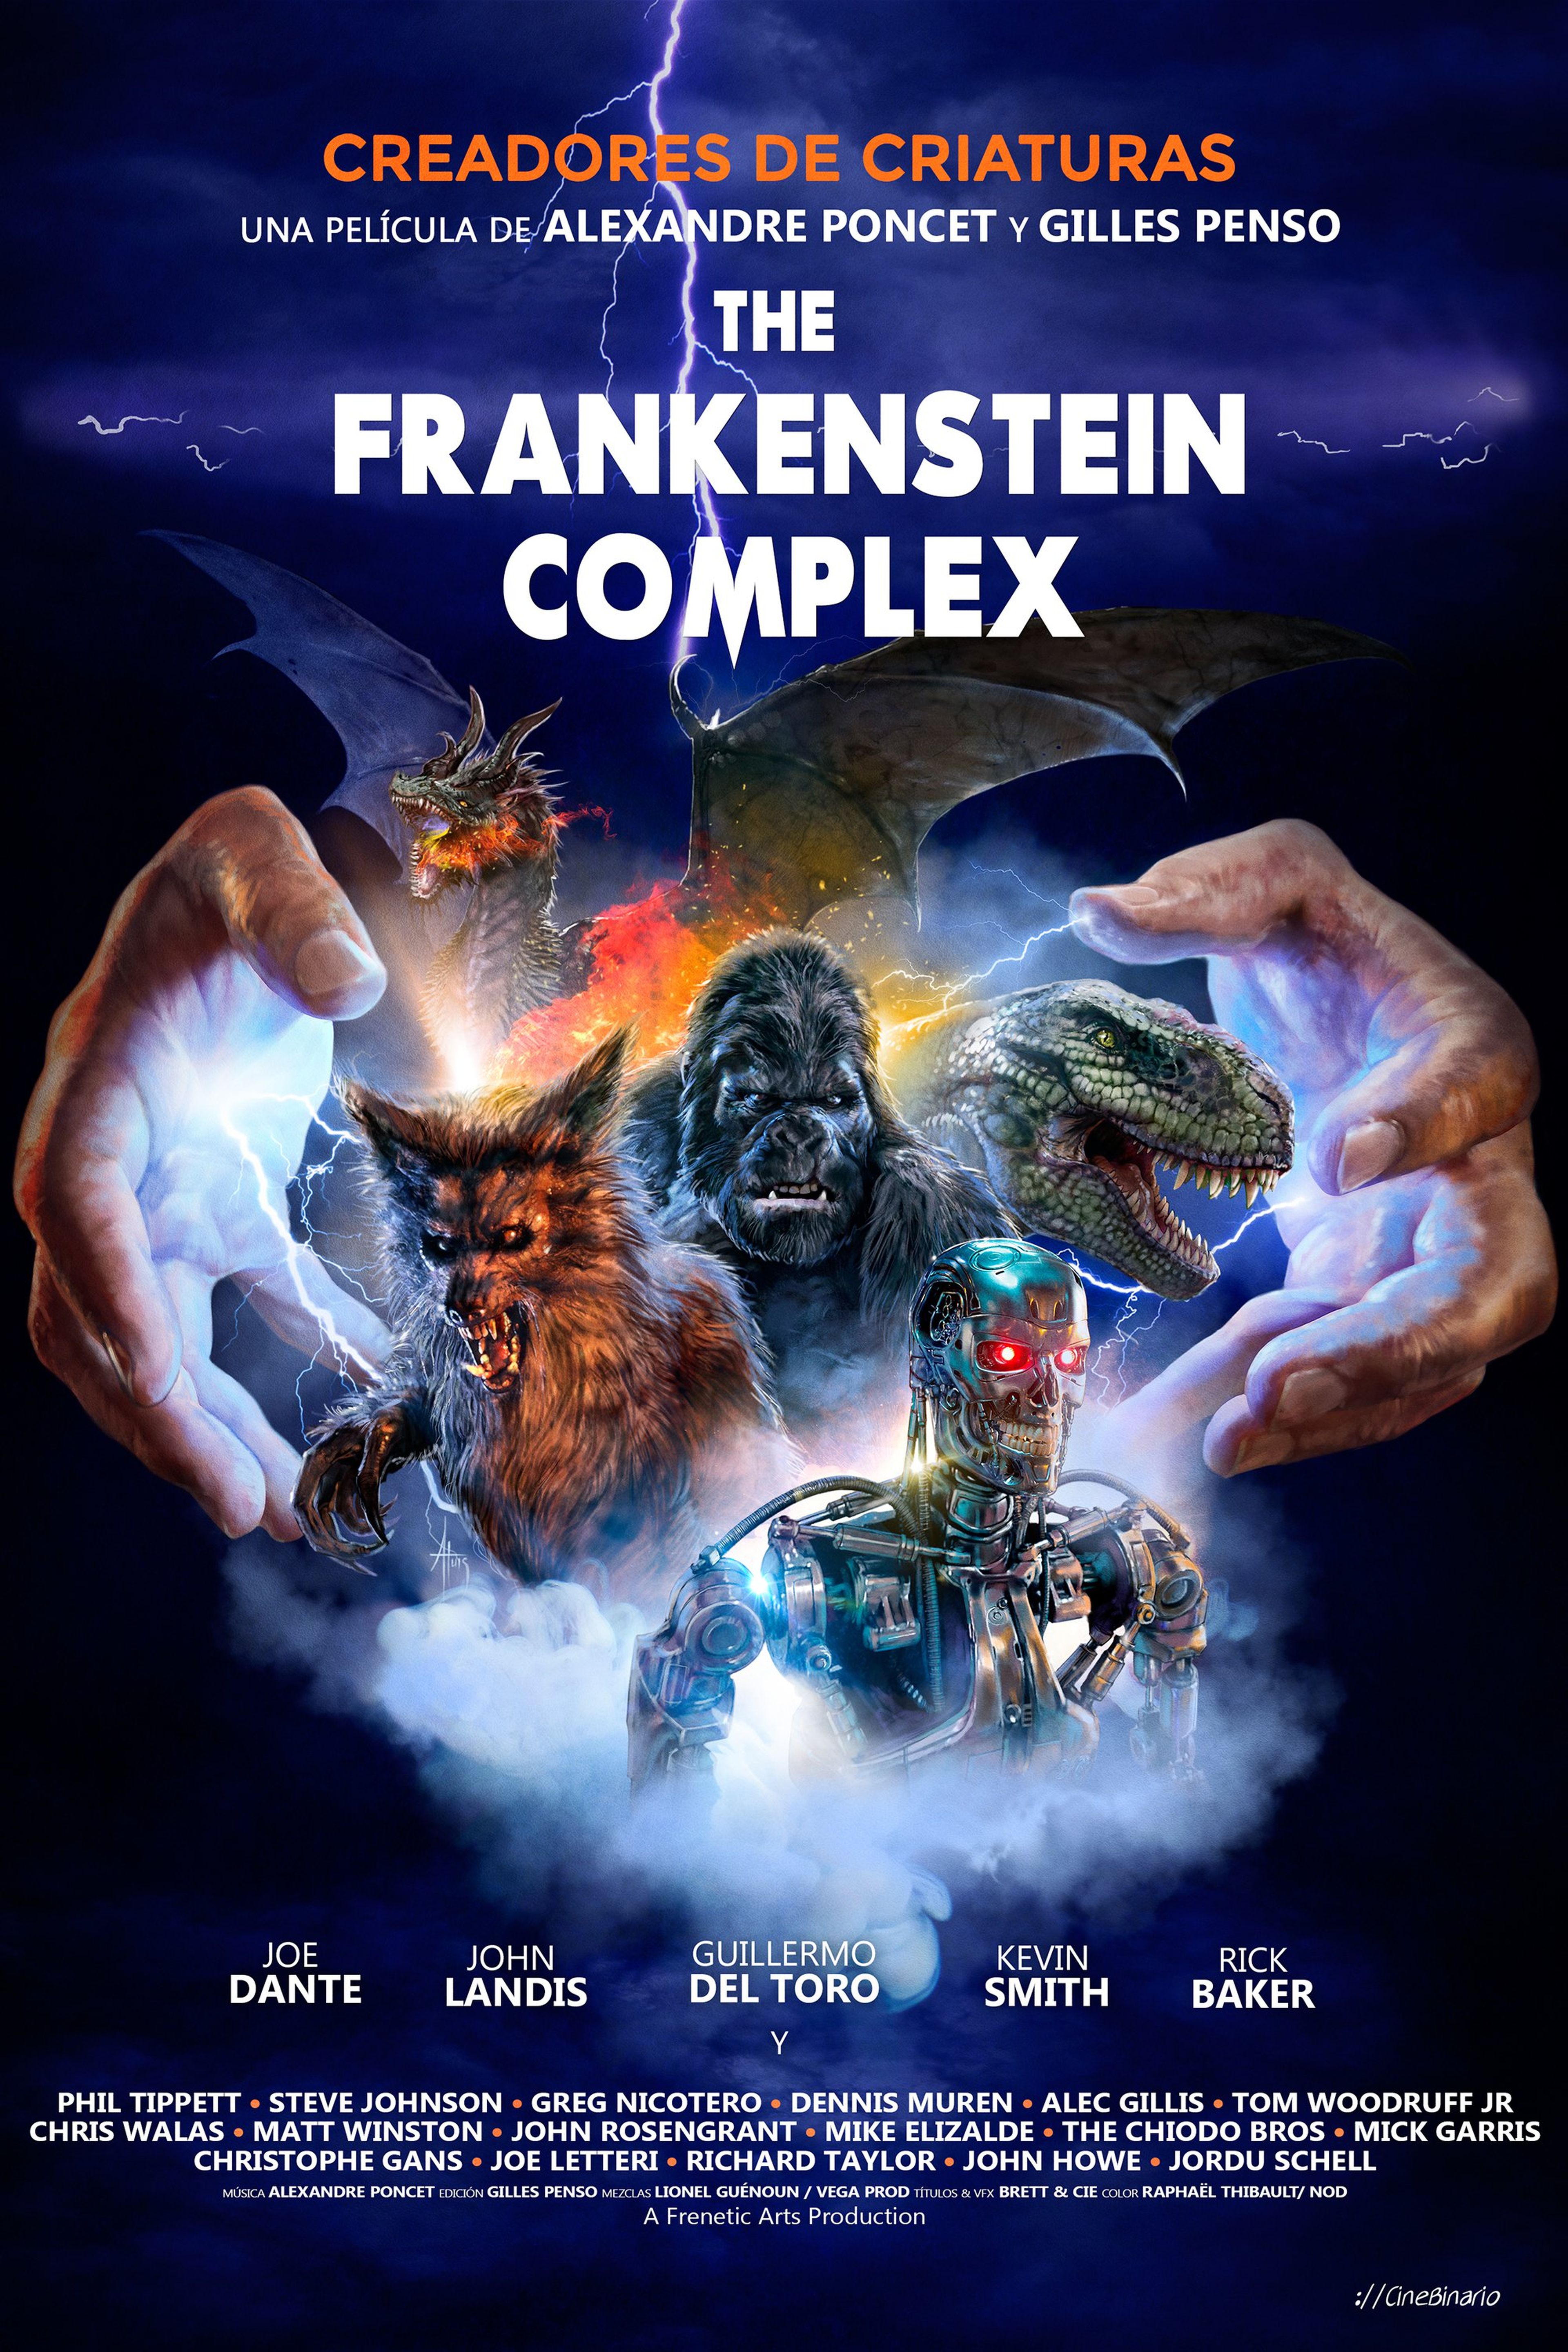 Creature Designers: The Frankenstein Complex